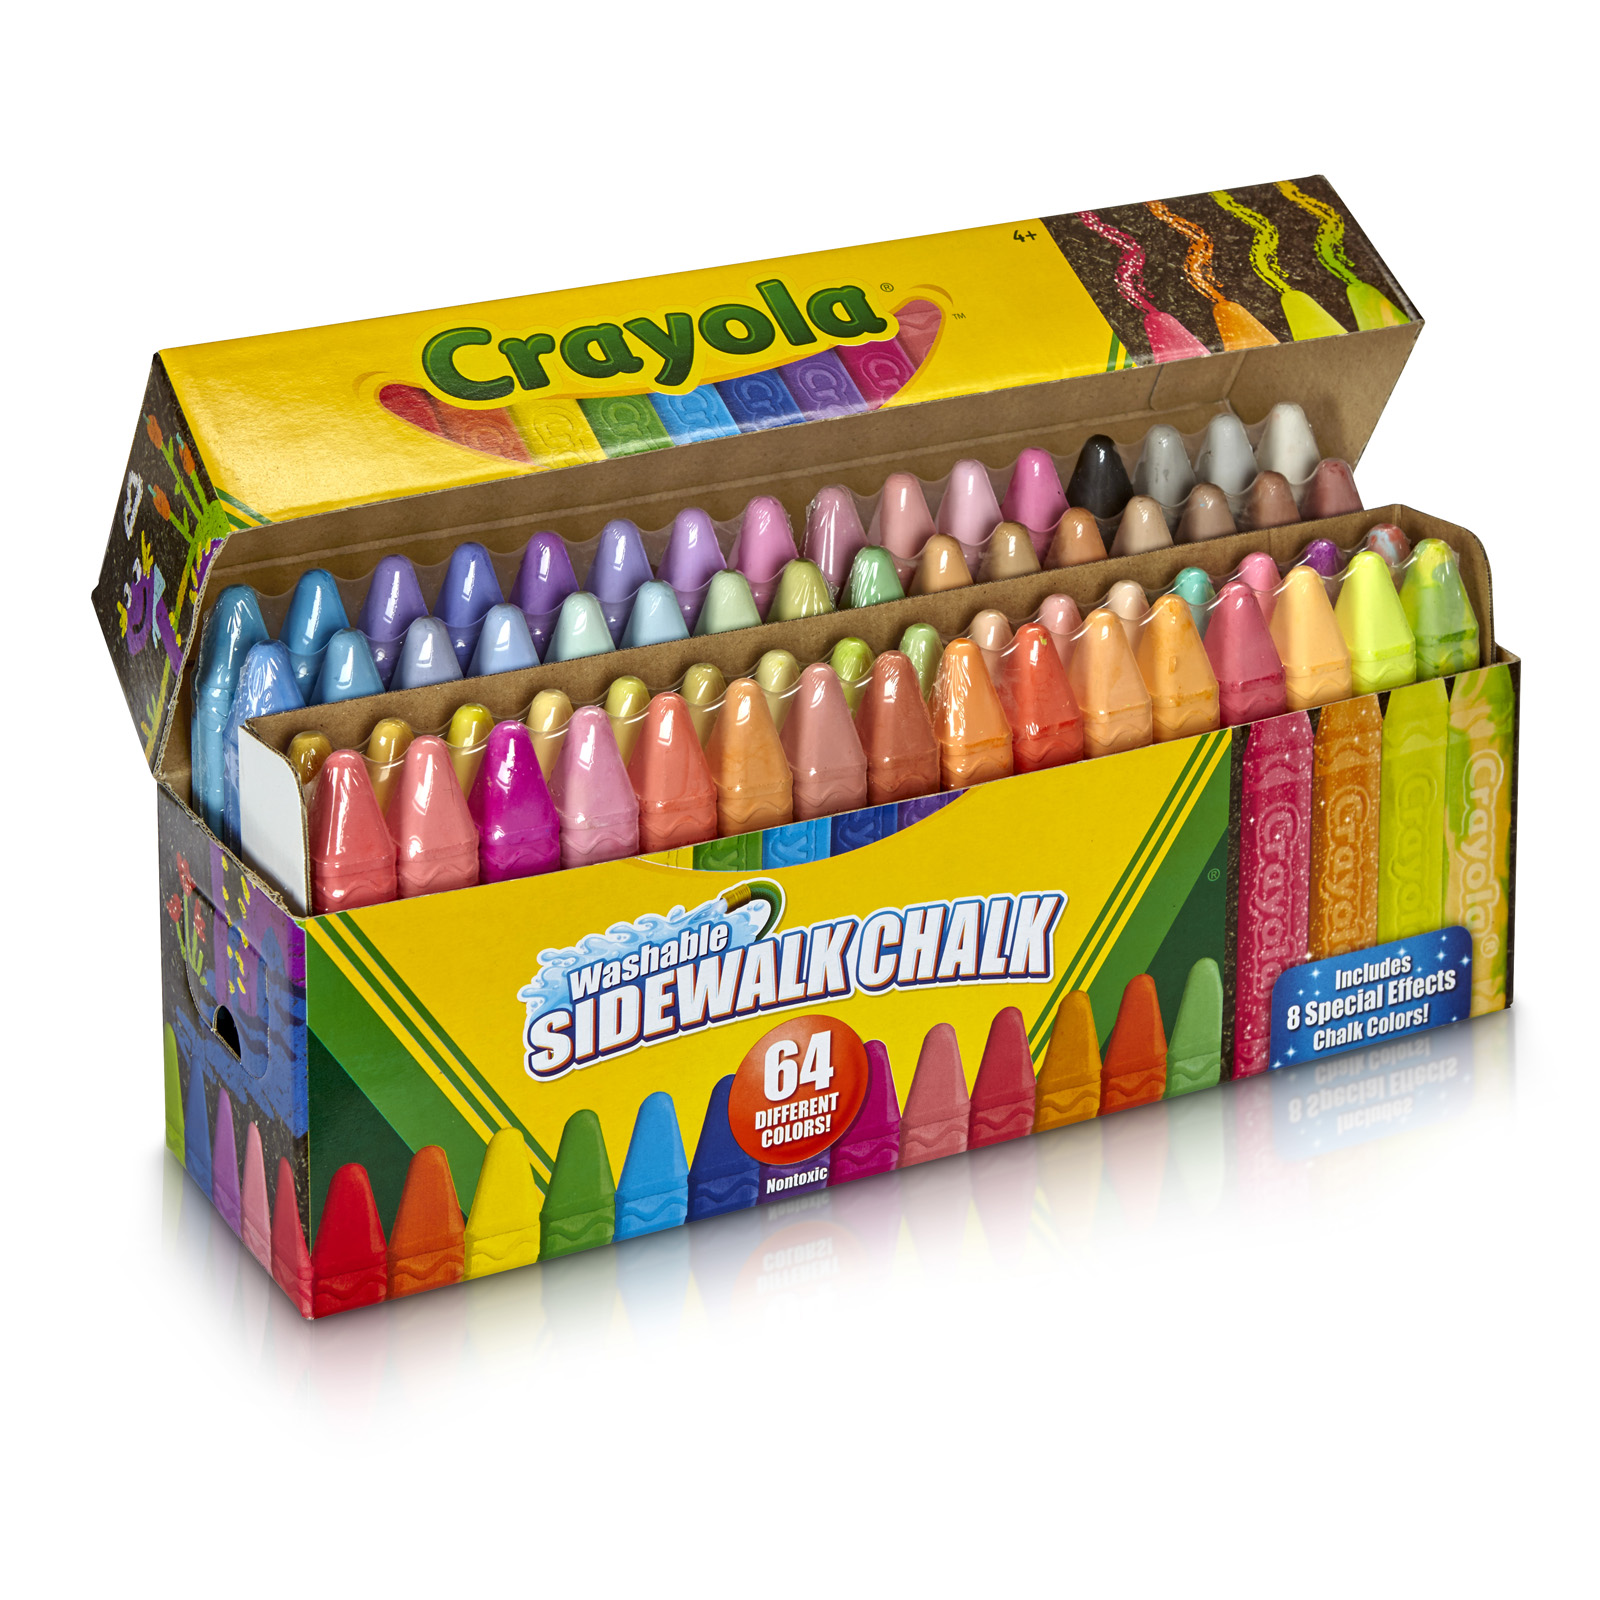 Crayola Ultimate Washable Sidewalk Chalk, 64 Count - image 4 of 4